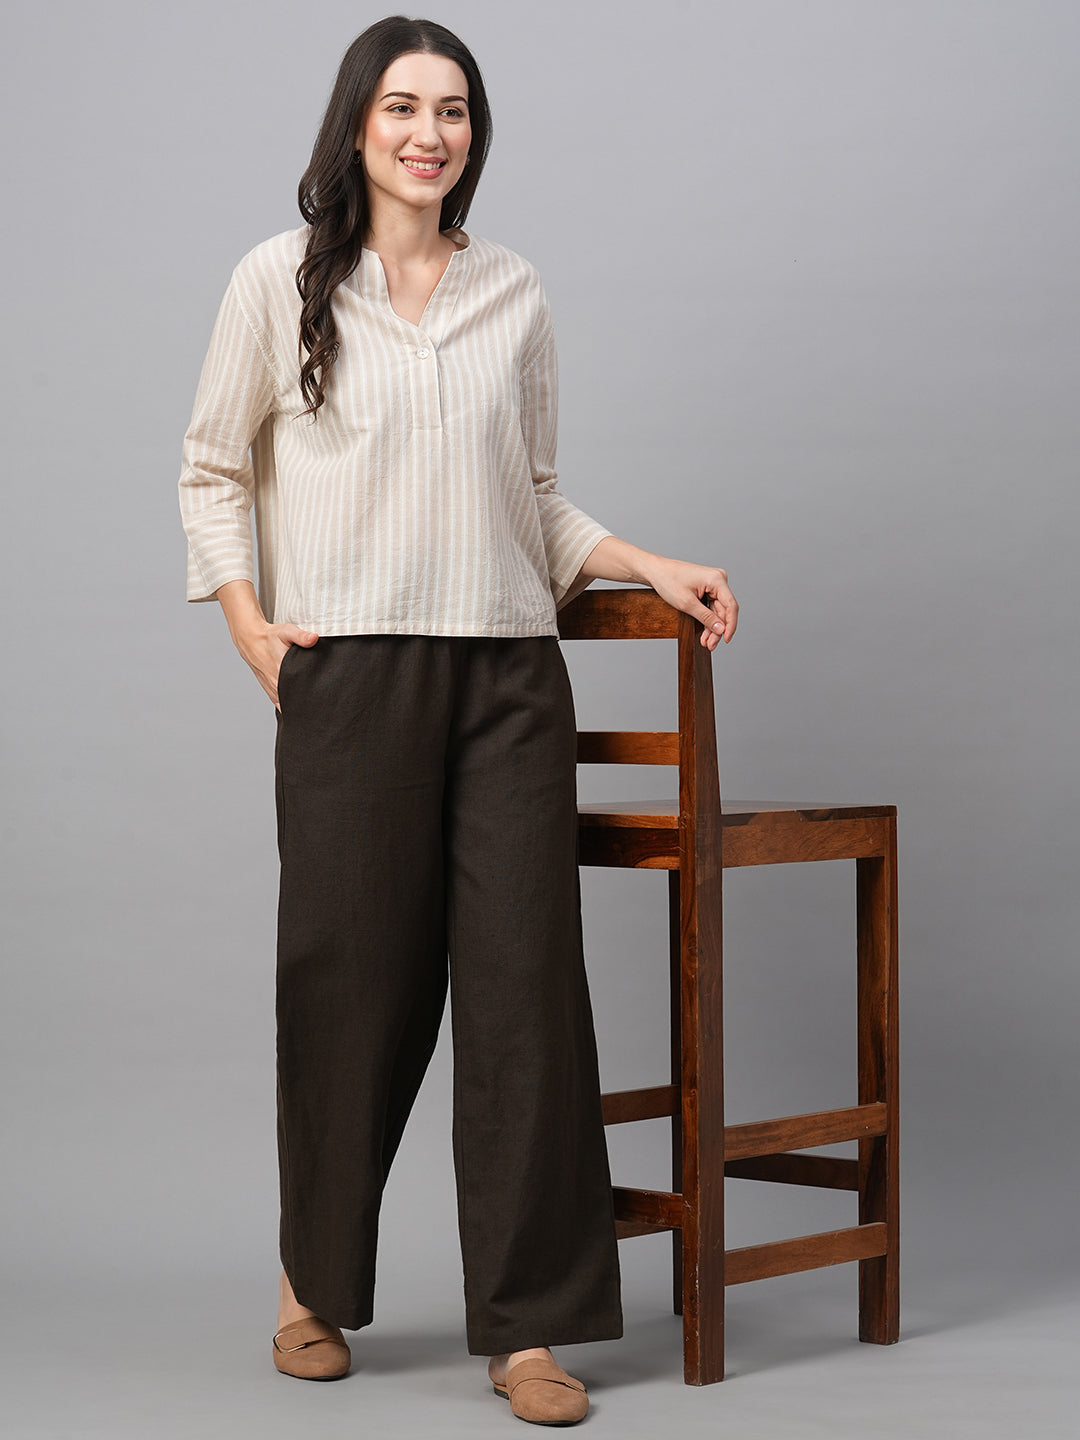 Women's Khaki Cotton Linen Regular Fit Blouse